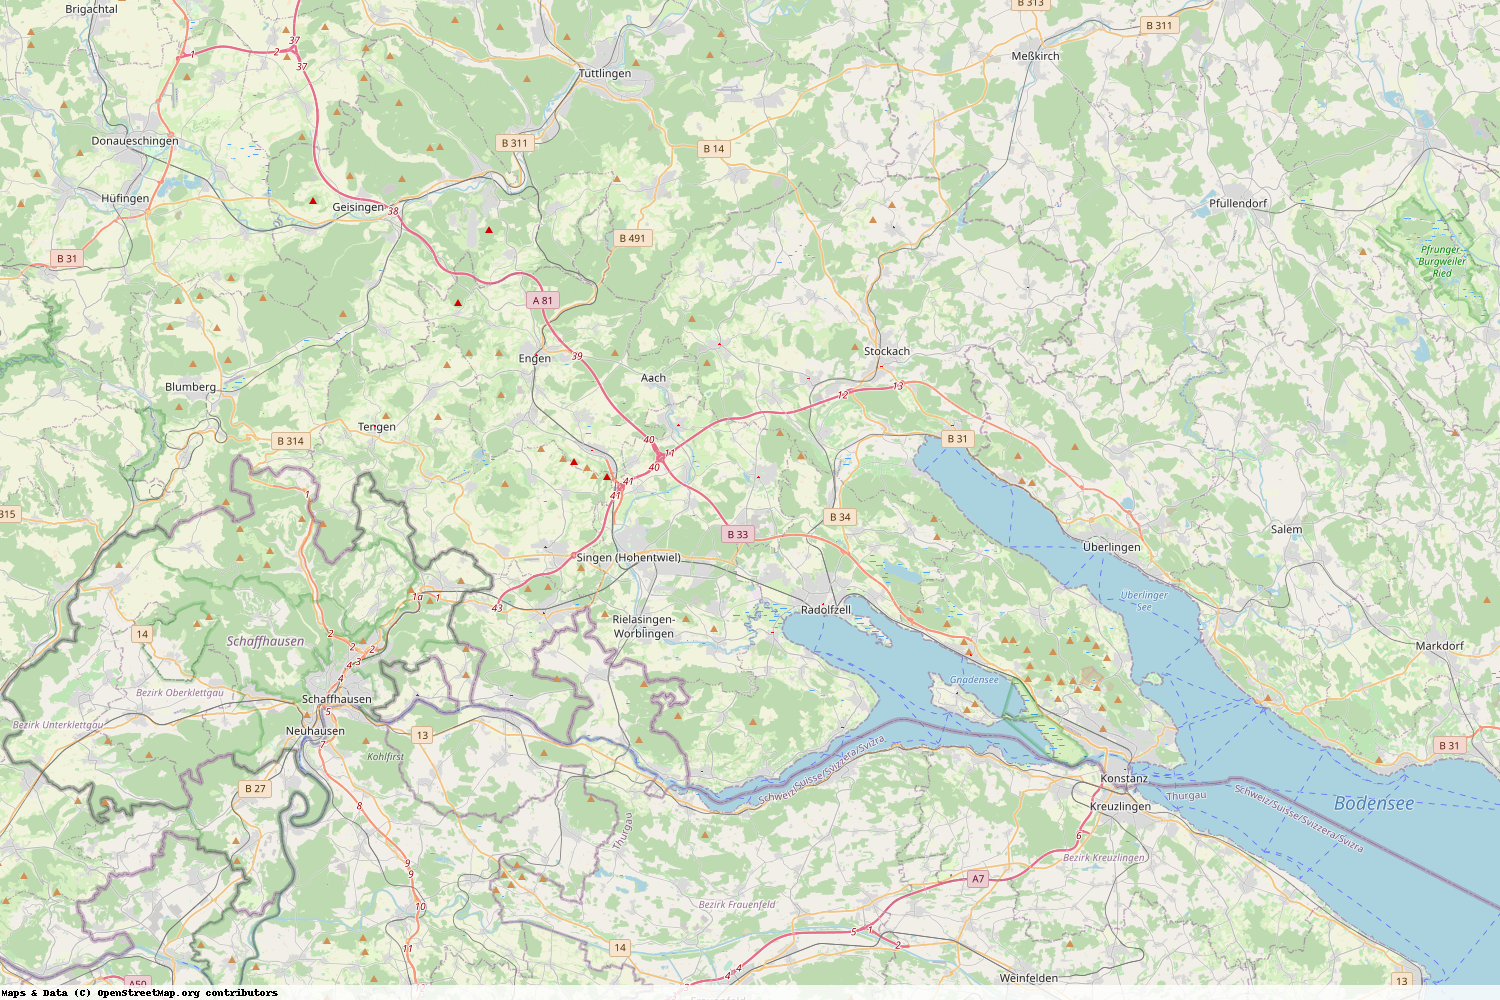 Ist gerade Stromausfall in Baden-Württemberg - Konstanz?